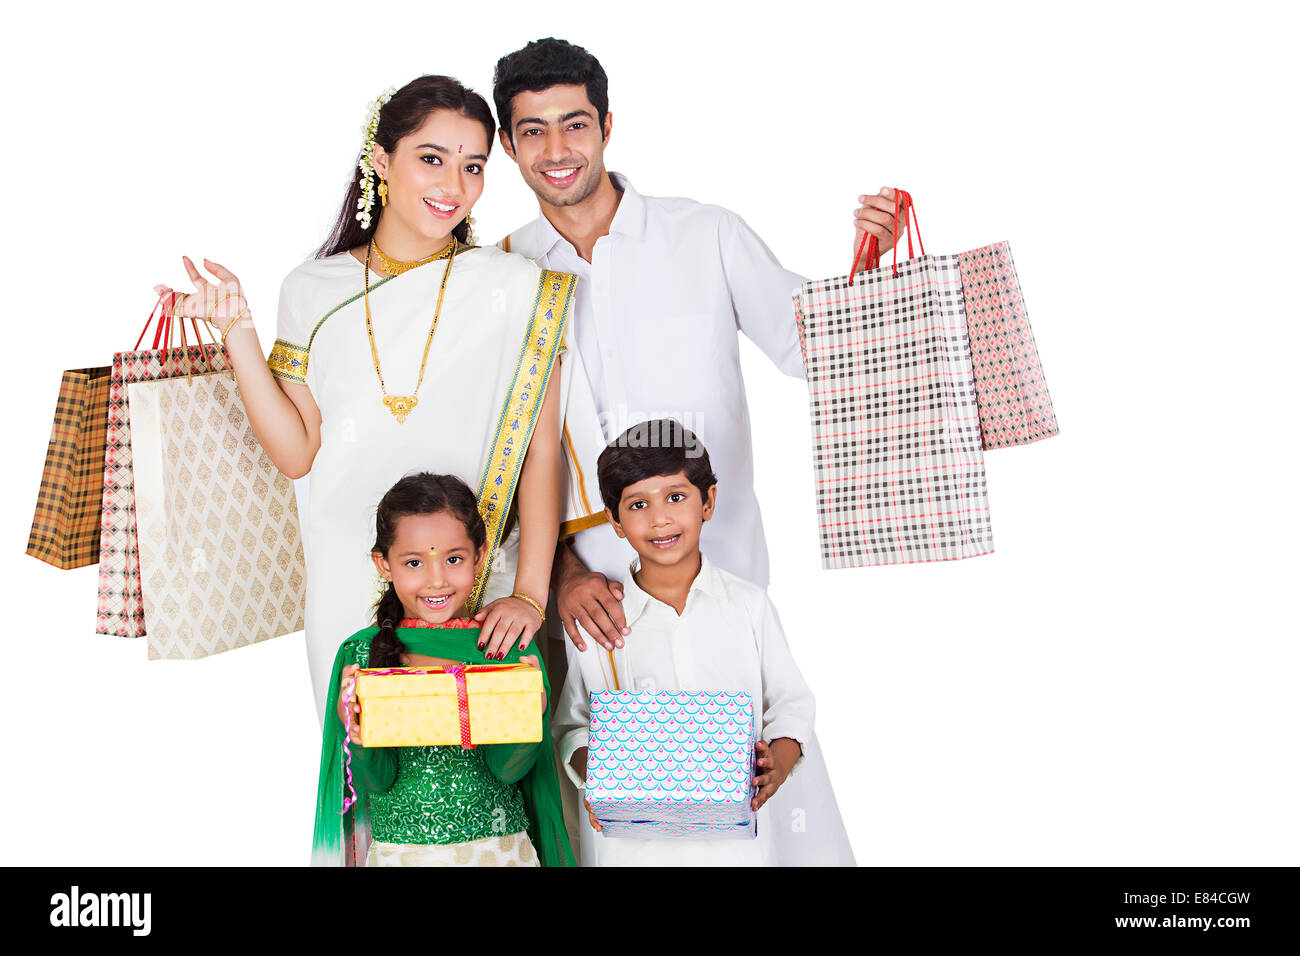 Sud famiglia indiana diwali gift shopping Foto Stock